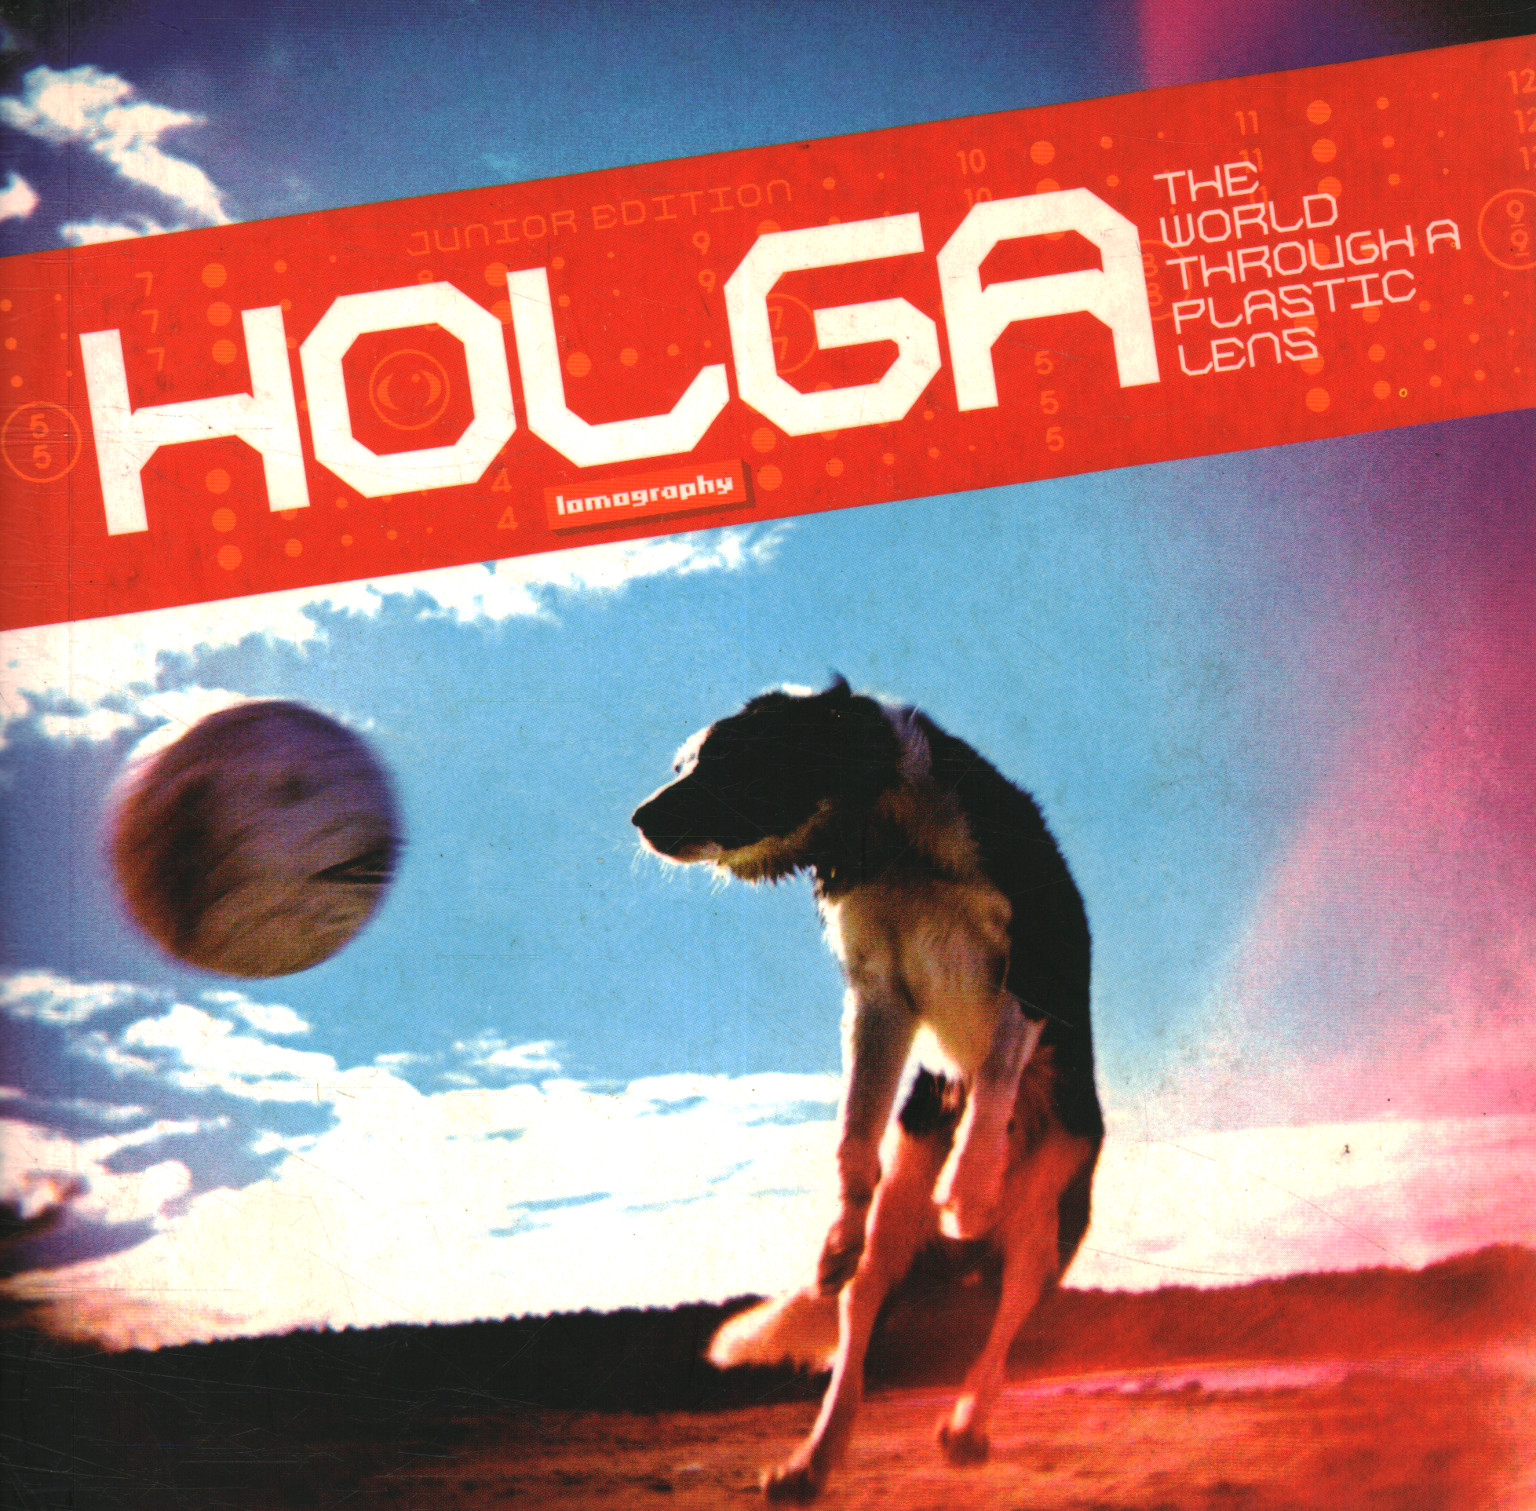 Holga: The world through a plastic lens